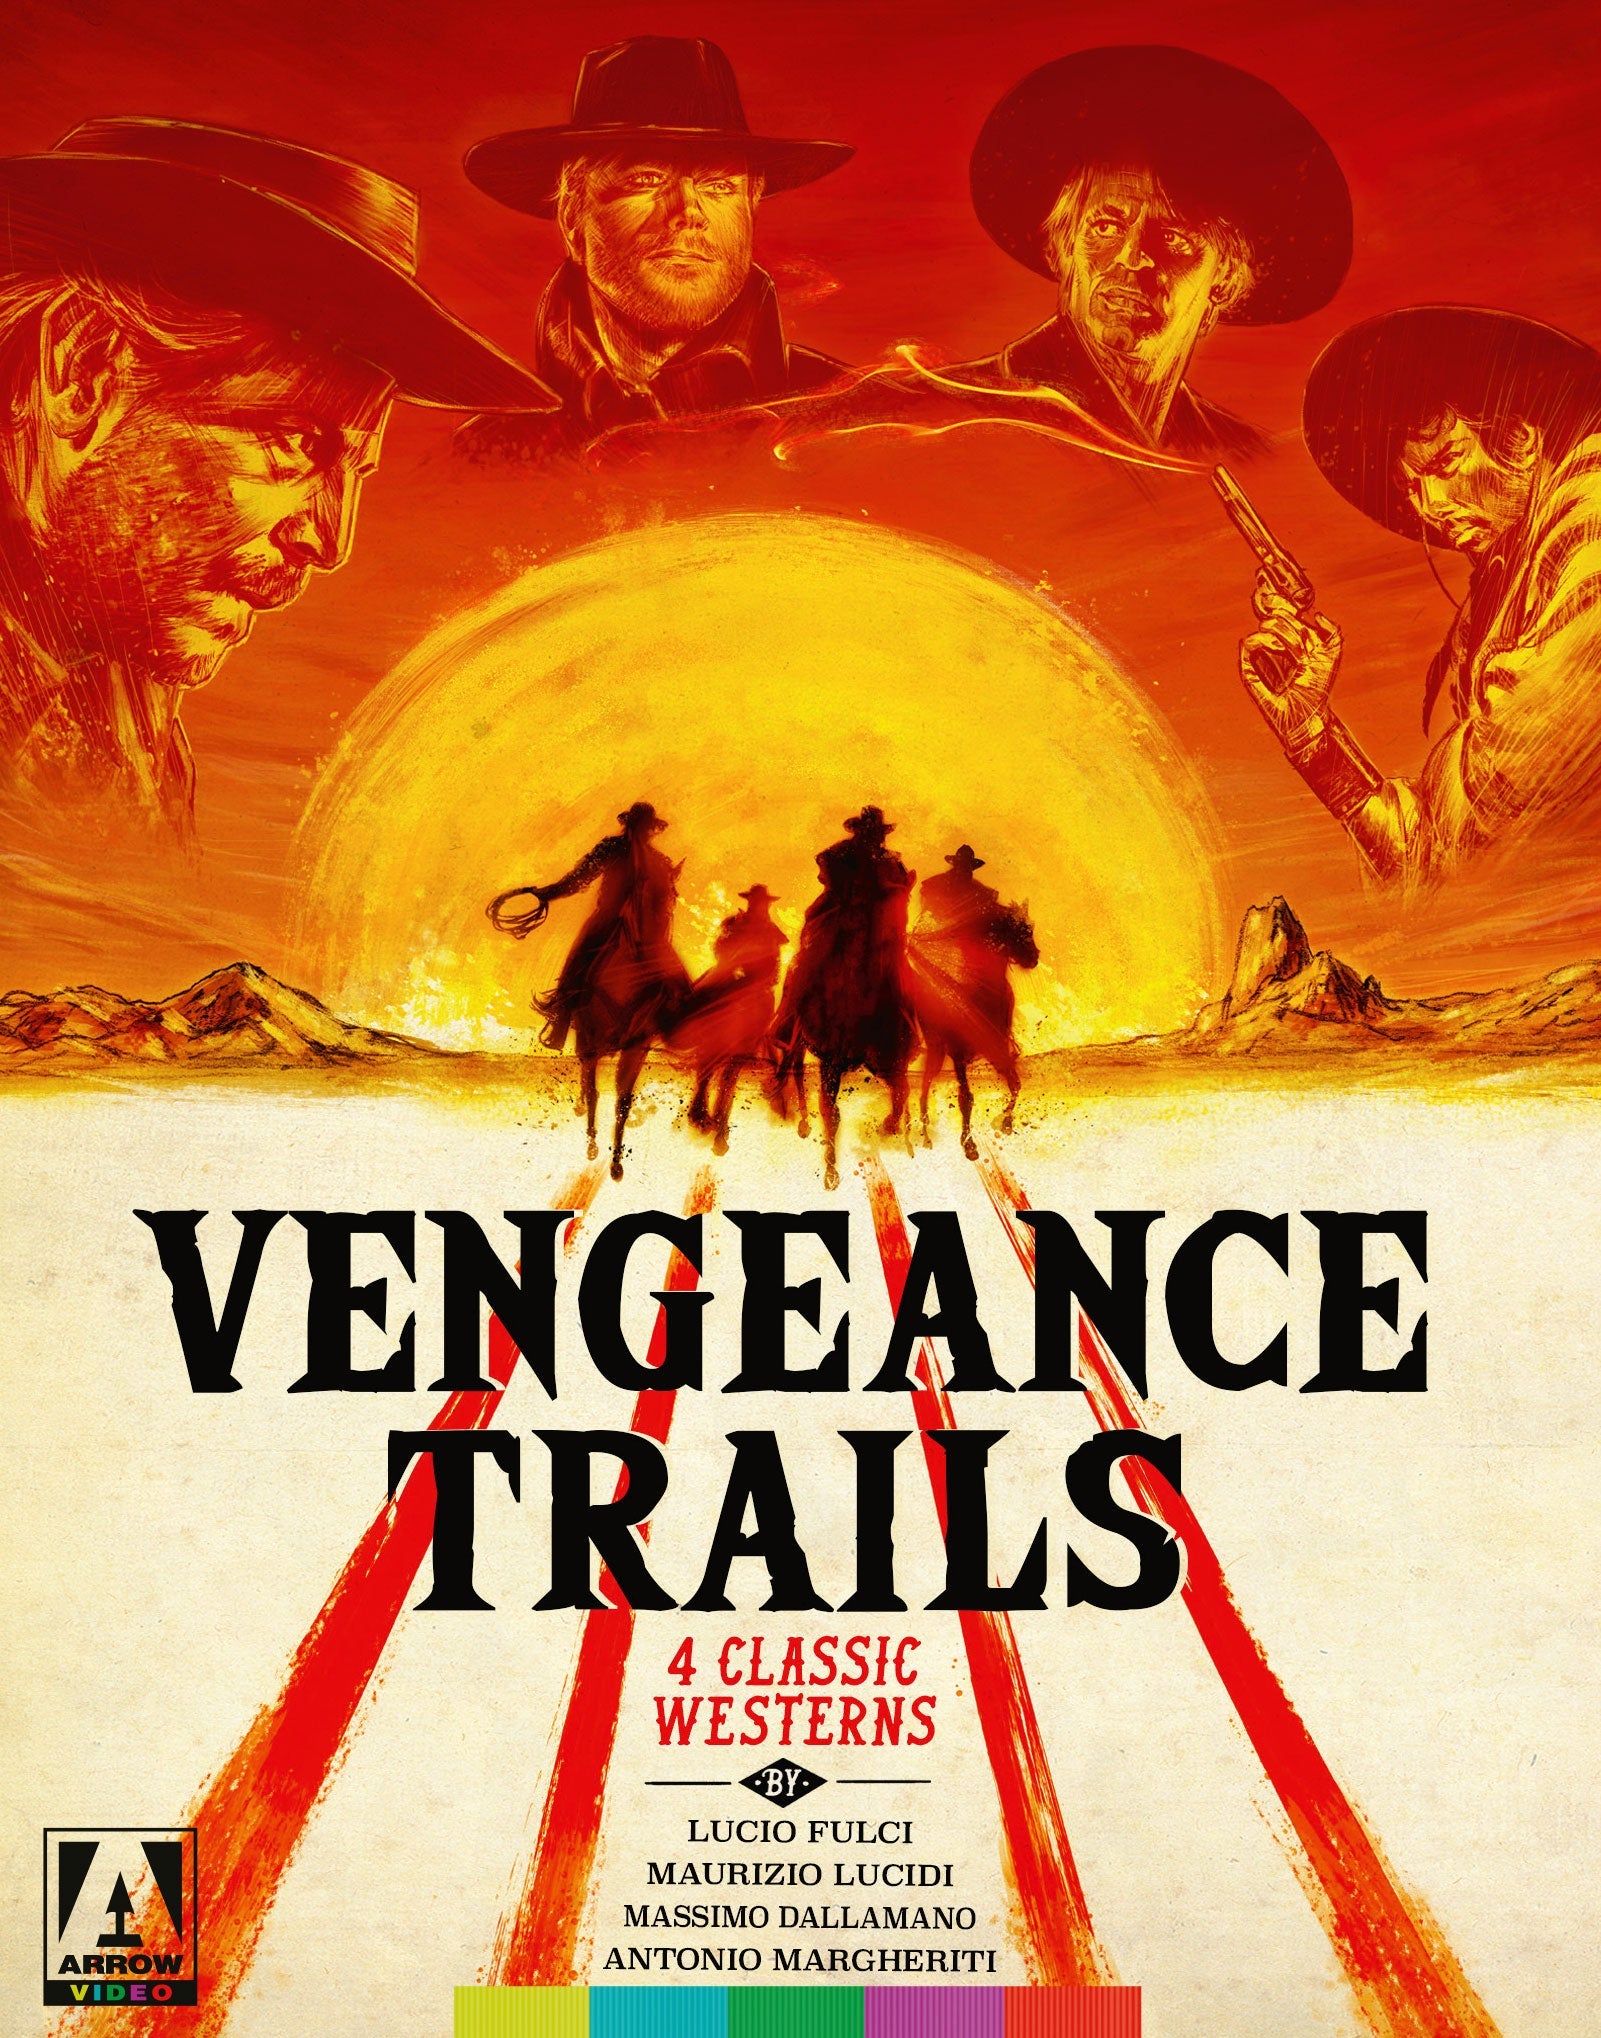 Vengeance Trails: Four Western Classics Blu-Ray Blu-Ray